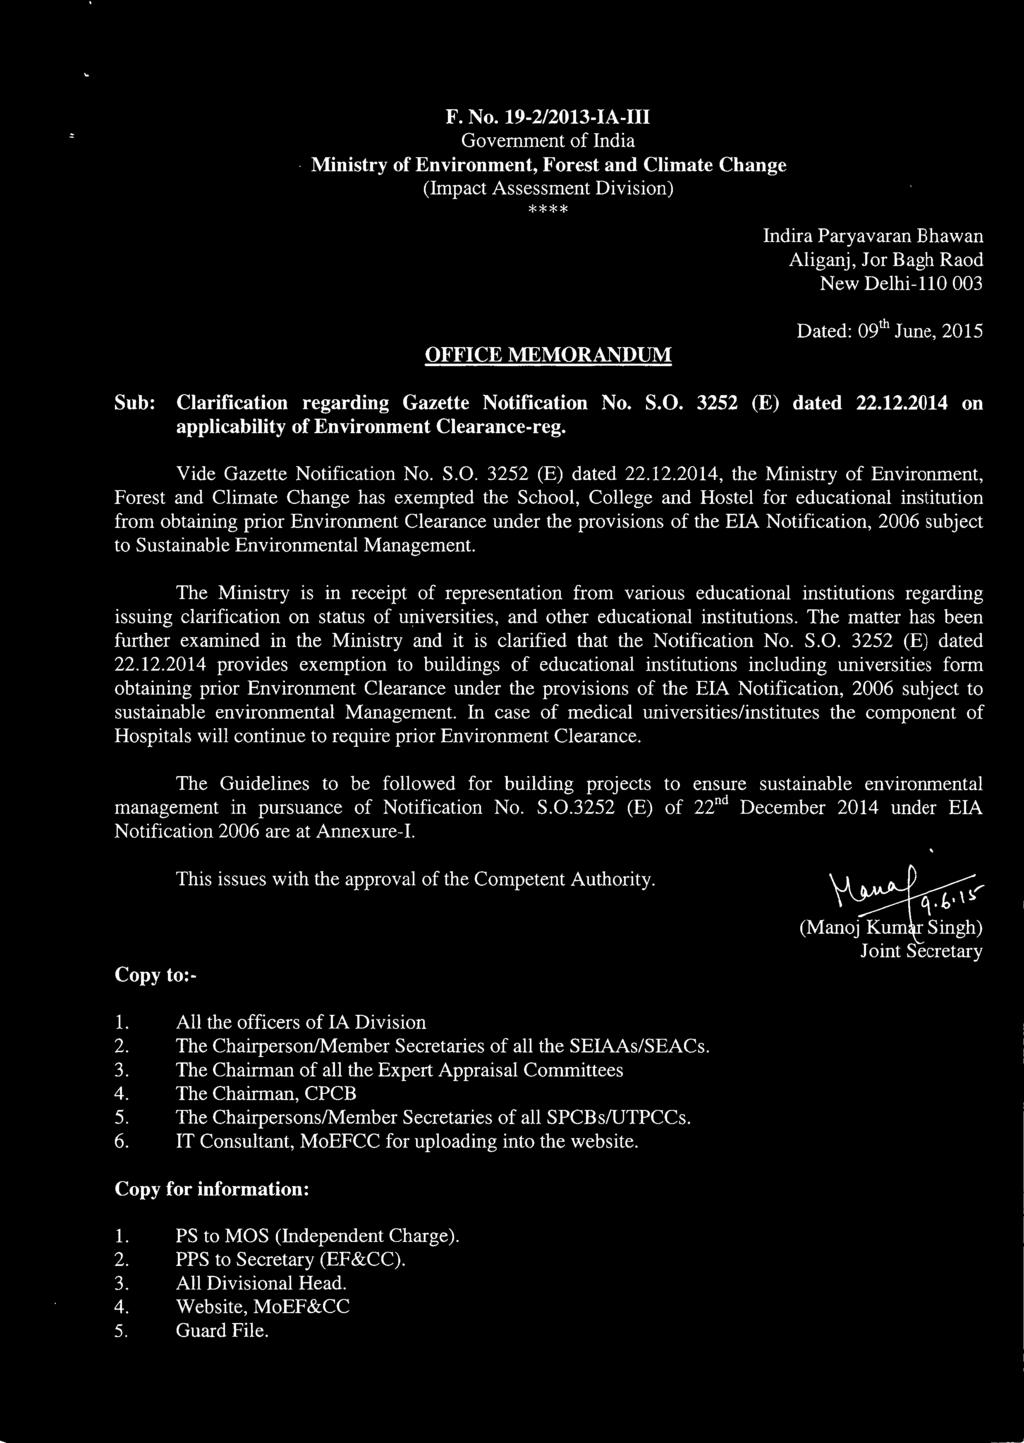 Clarification regarding Gazette Notification No. S.O. 3252 (E) dated 22.12.